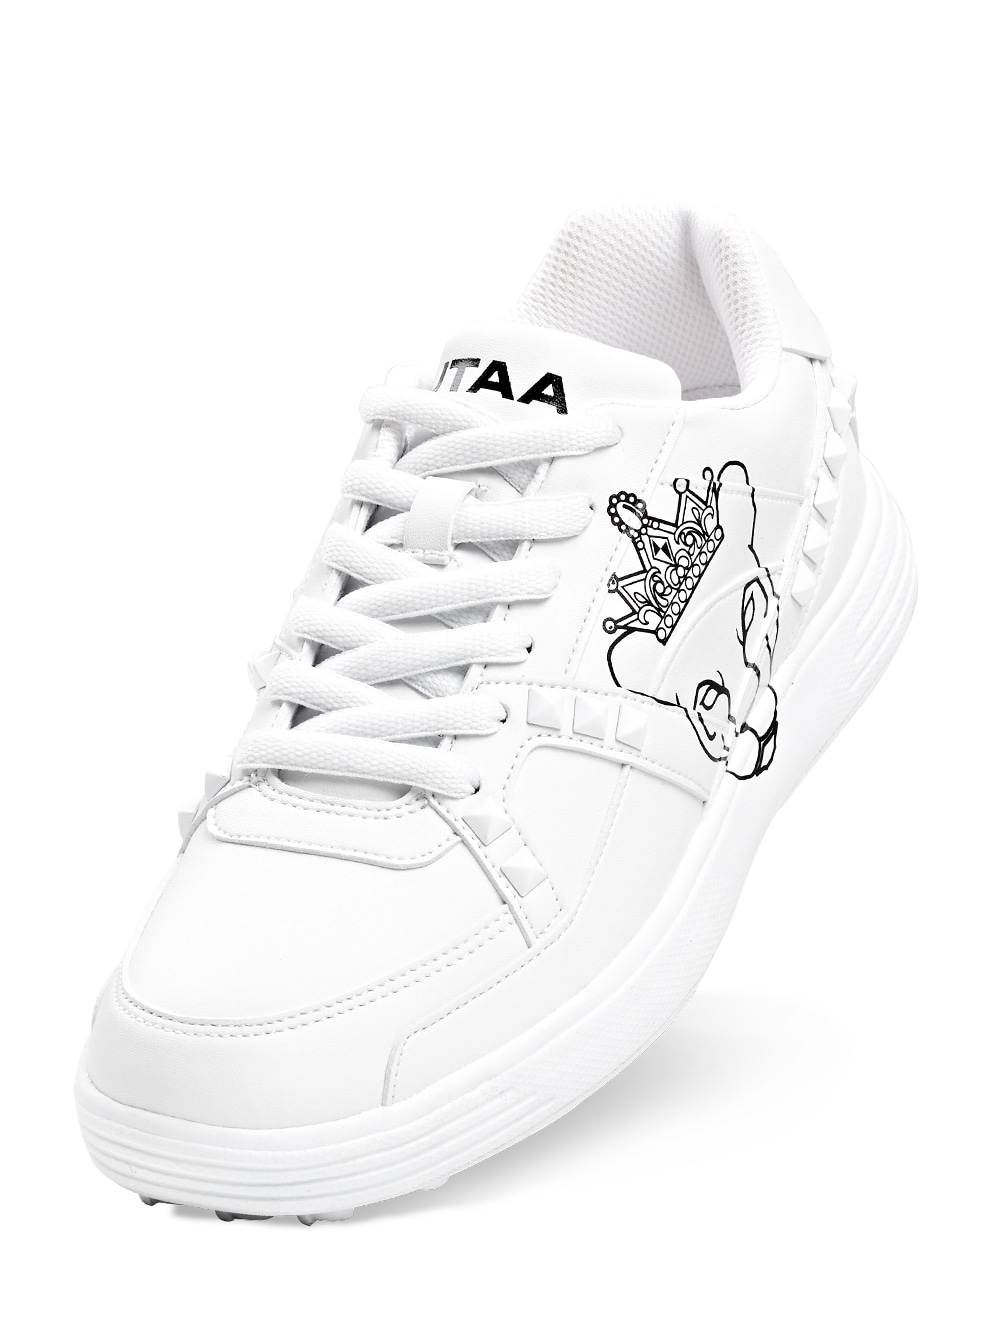 UTAA Crown Panther Golf Sneakers : Women&#039;s (UA0GHF102WH)